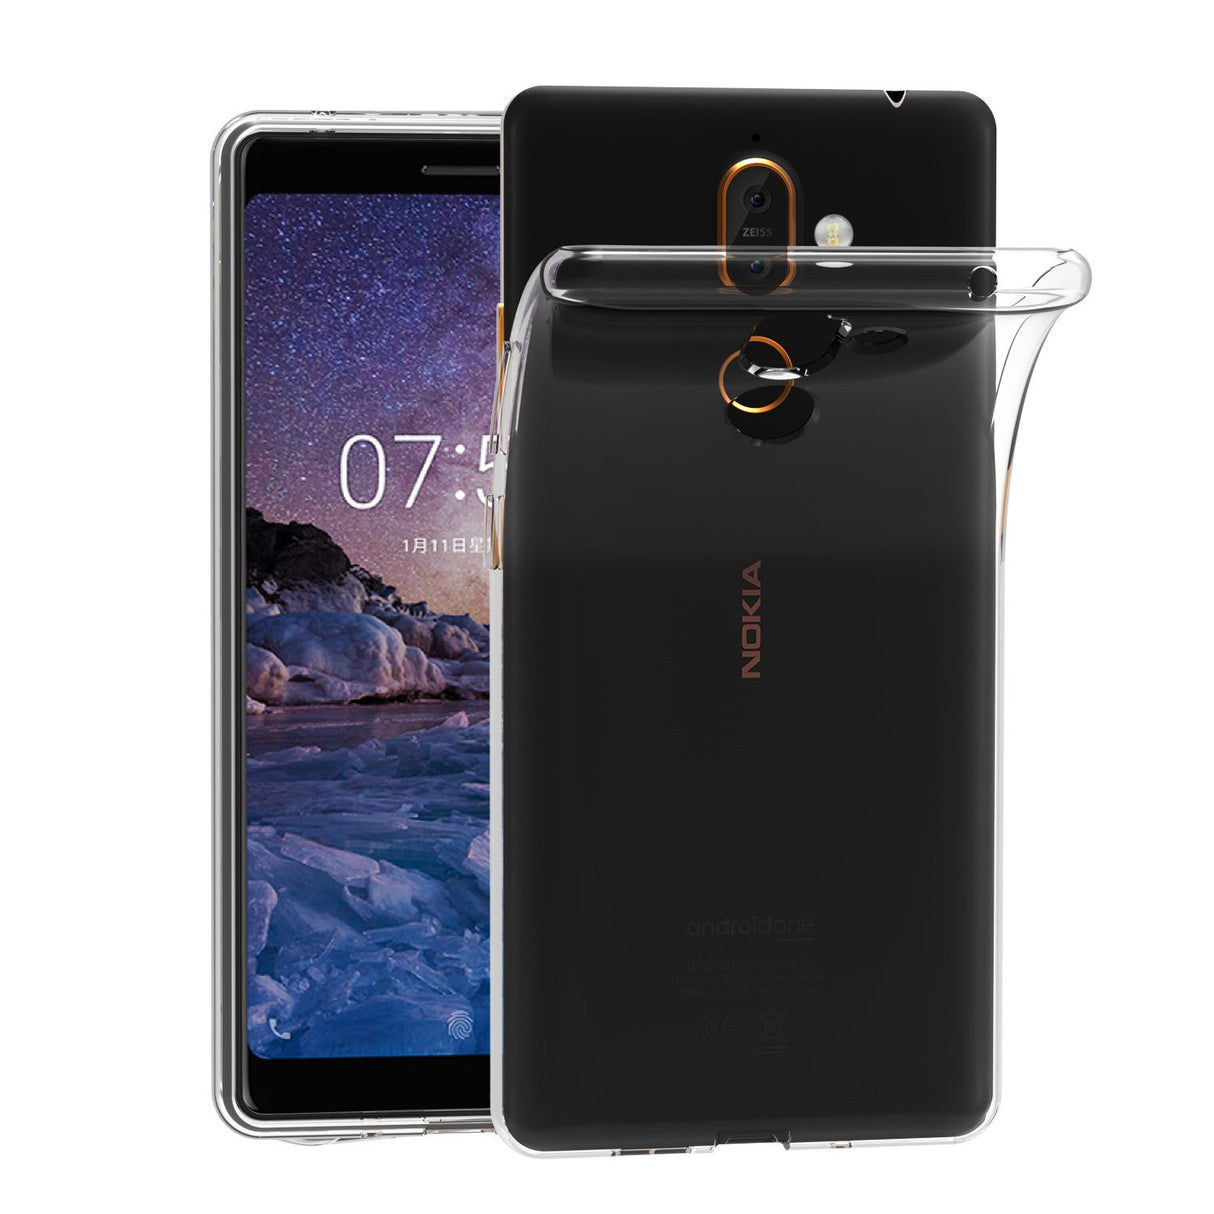 Capa Transparente Gel TPU Silicone para Nokia 7 Plus - Multi4you®